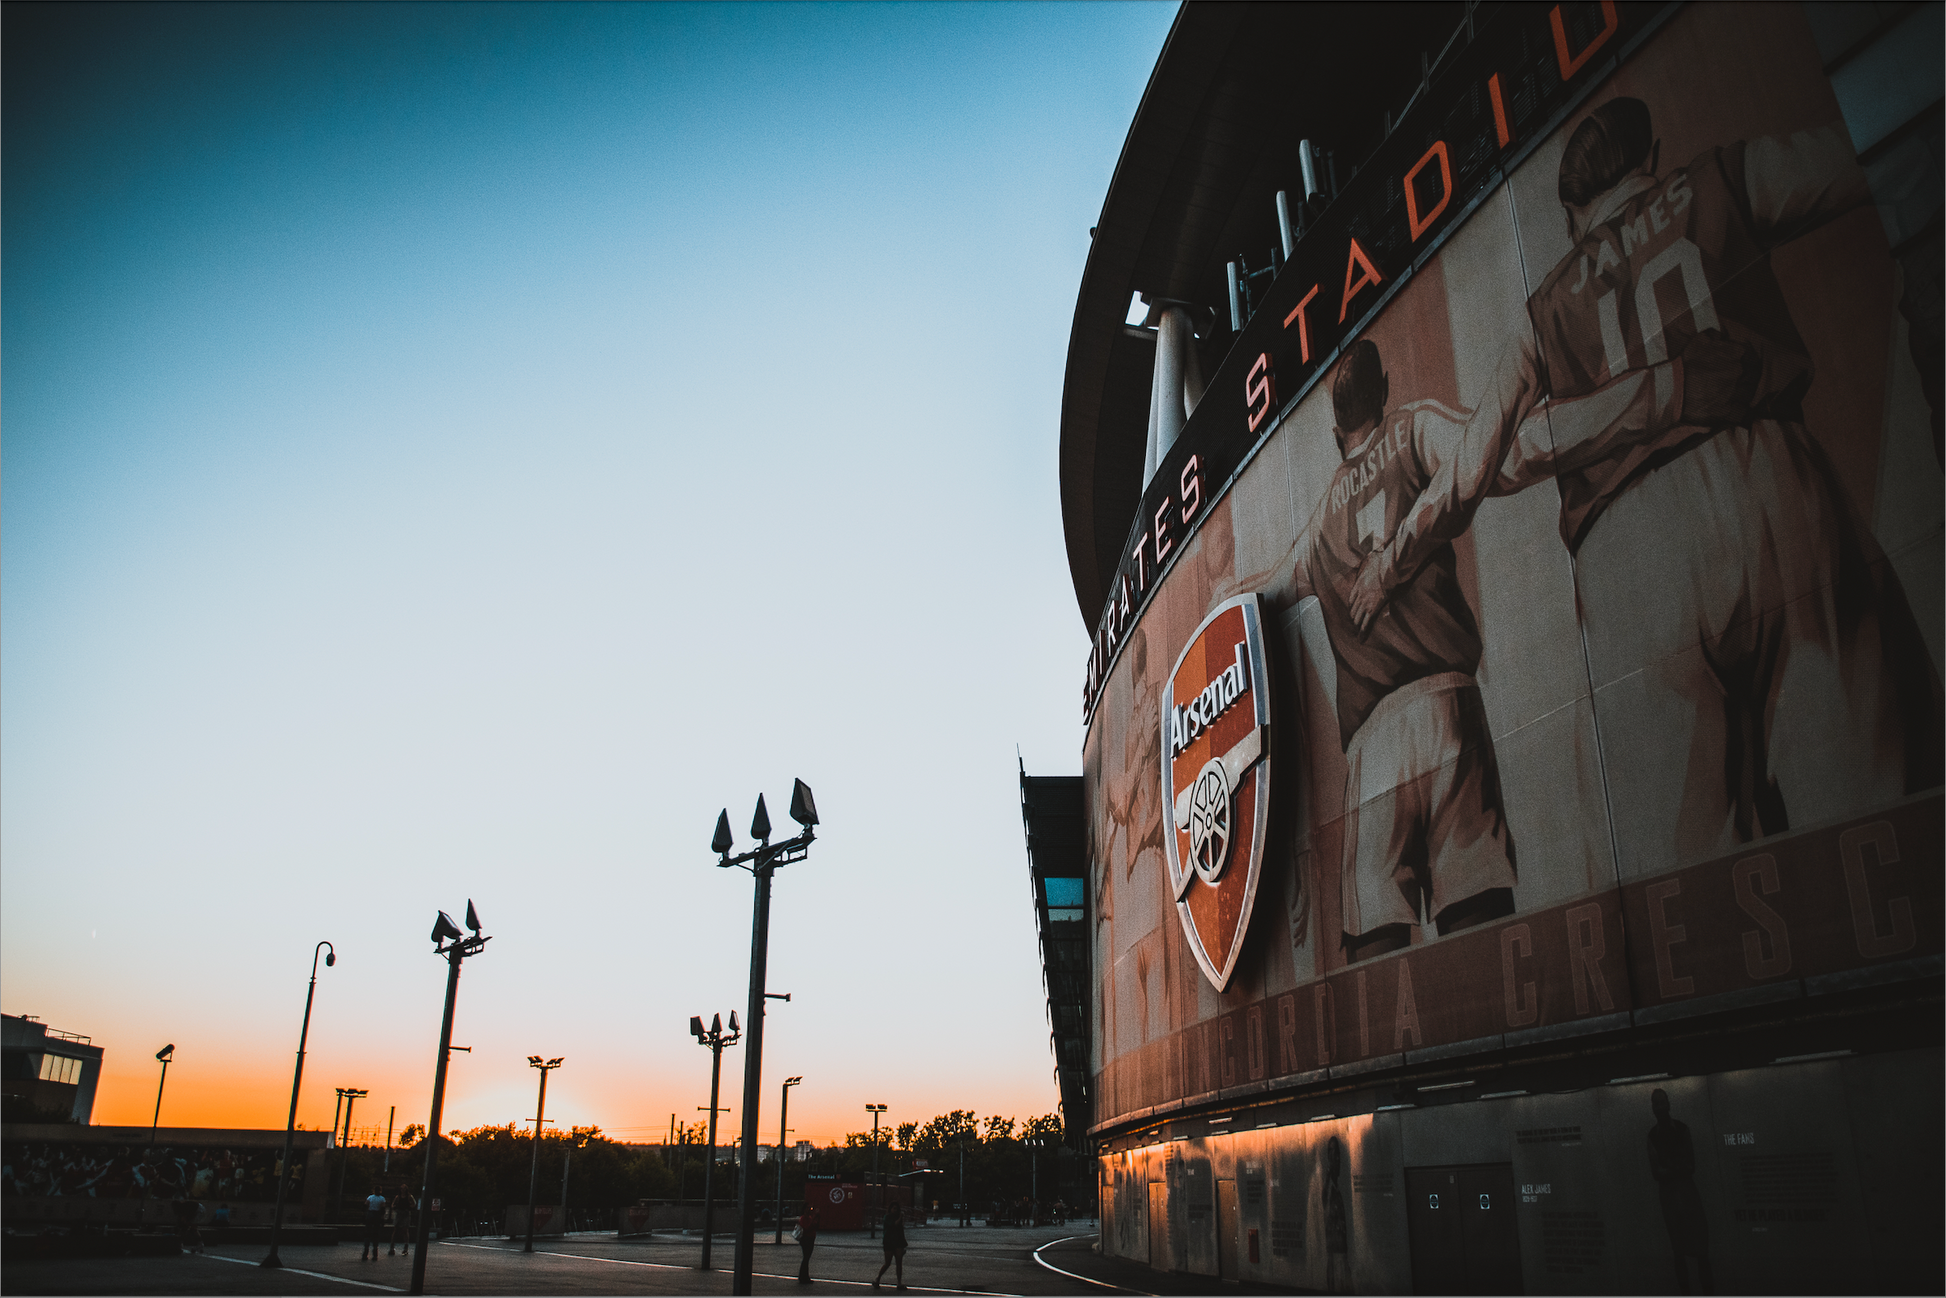 Photograph of Arsenal's Emirates Stadium in North London.